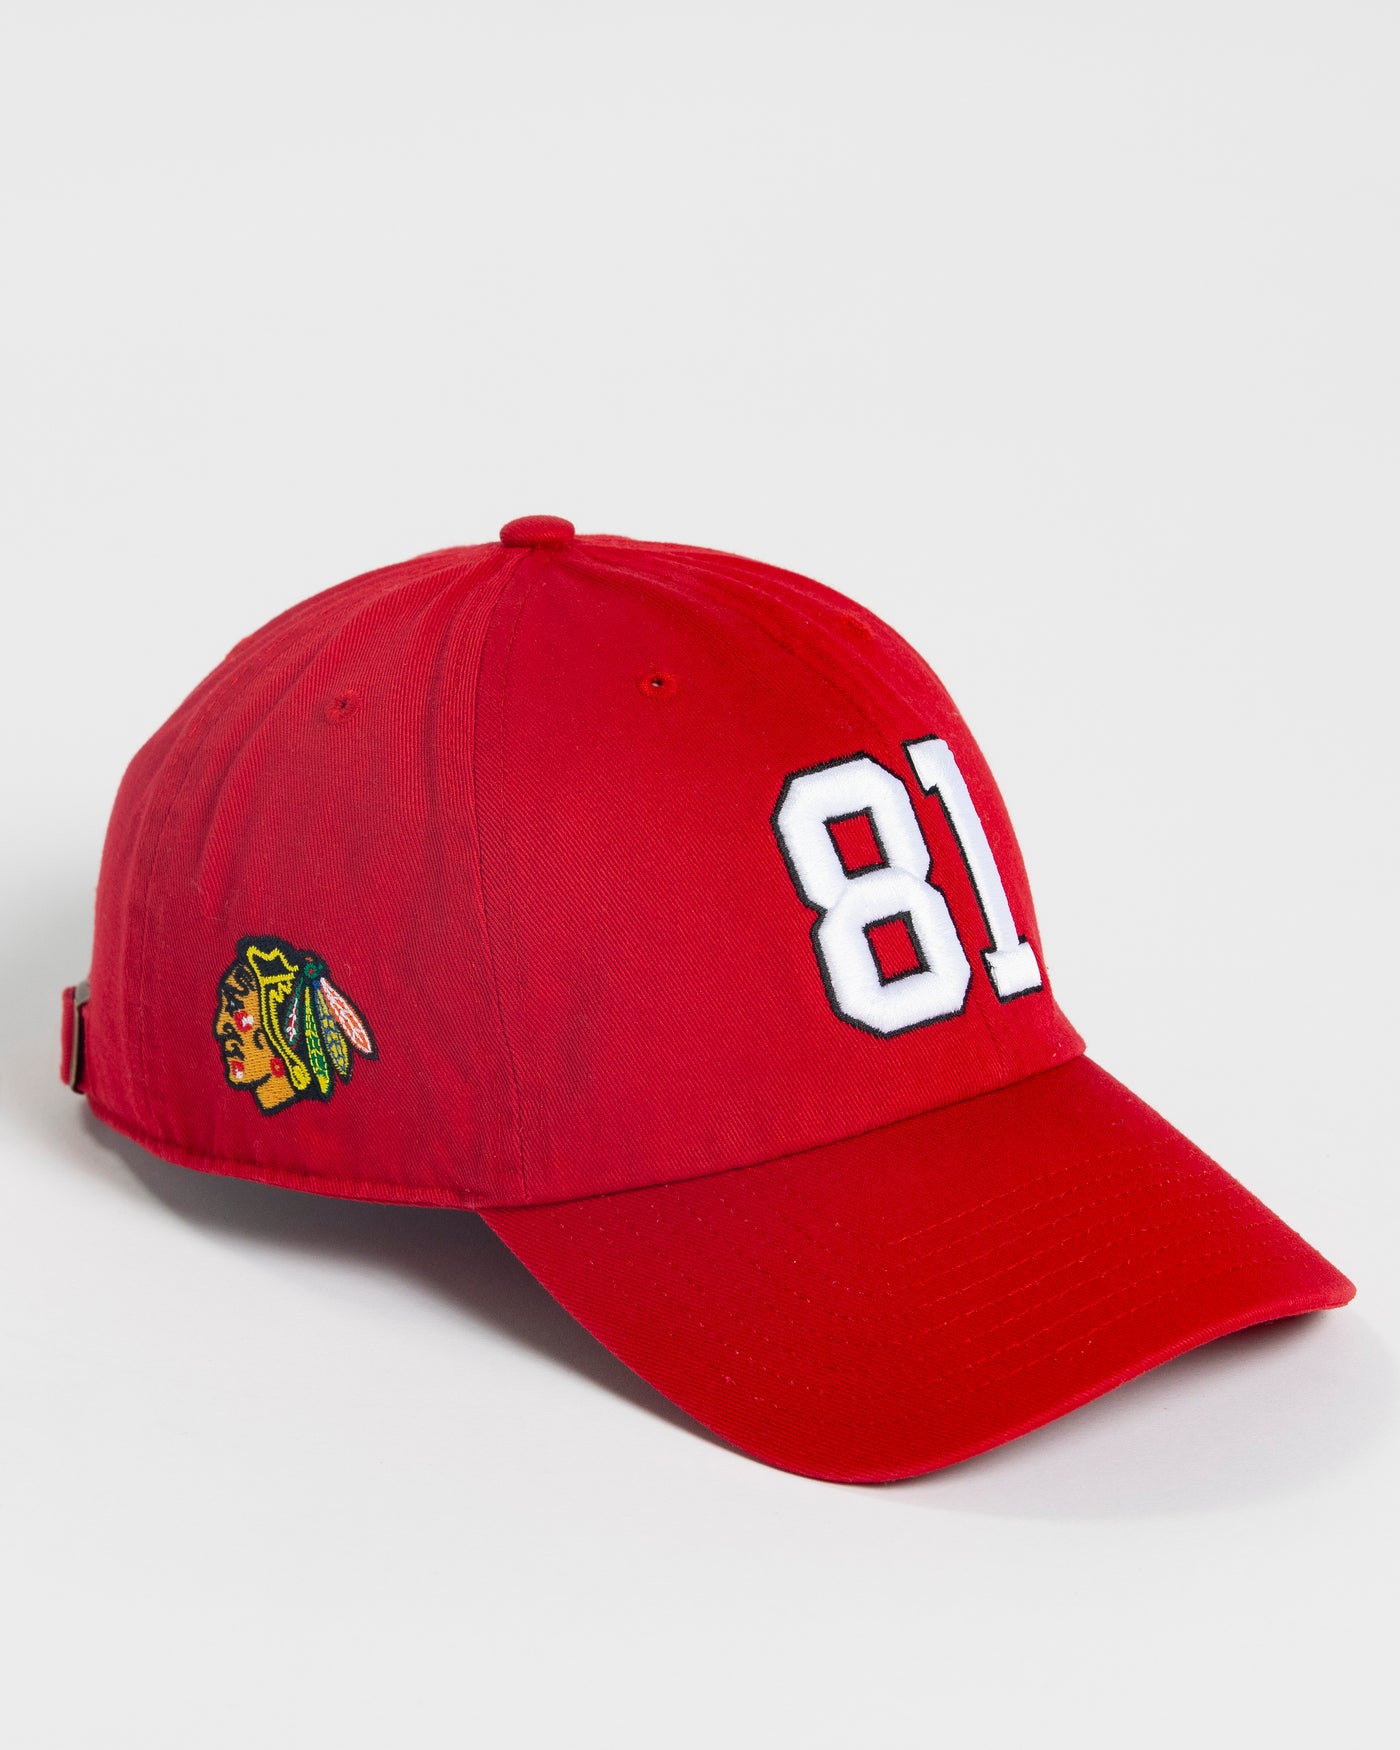 '47 Chicago Blackhawks Marian Hossa Retirement 81 Cleanup Hat